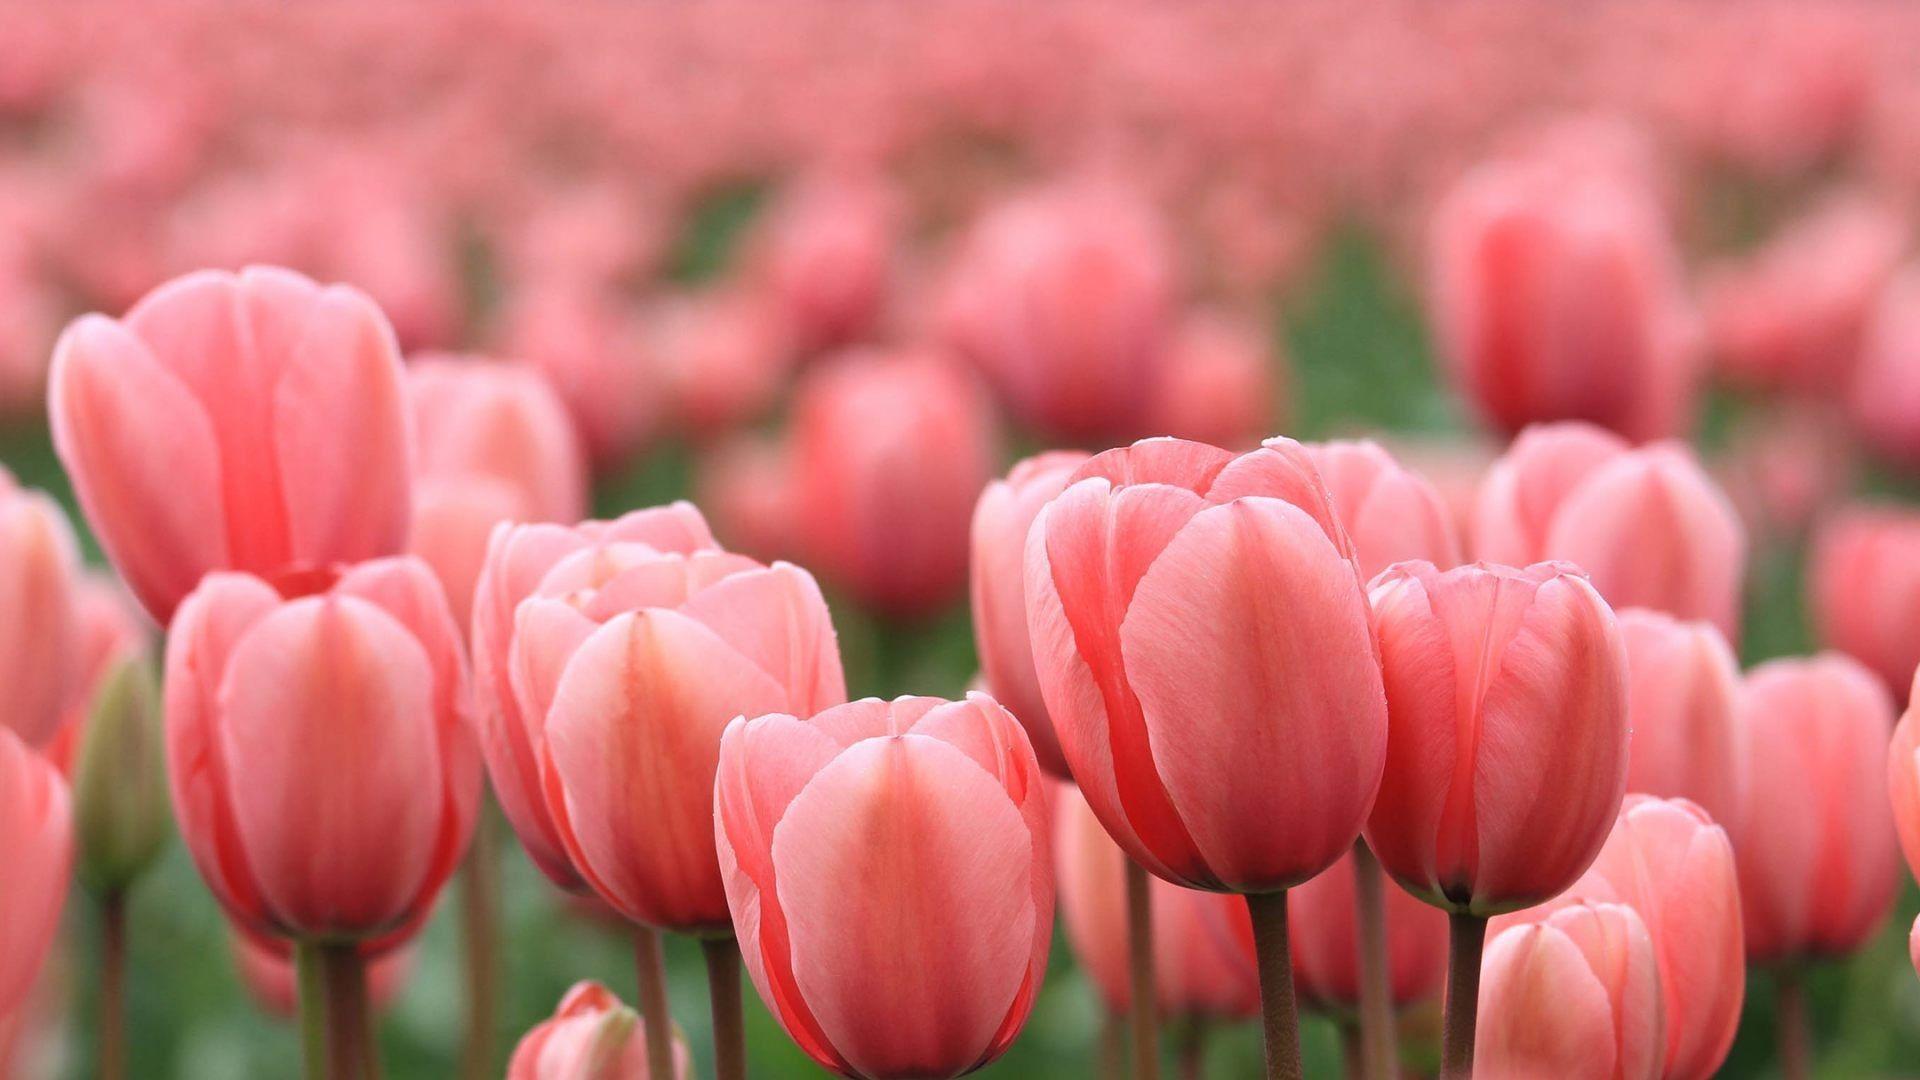 Colorful tulips phone wallpaper pink  Premium Vector Illustration   rawpixel